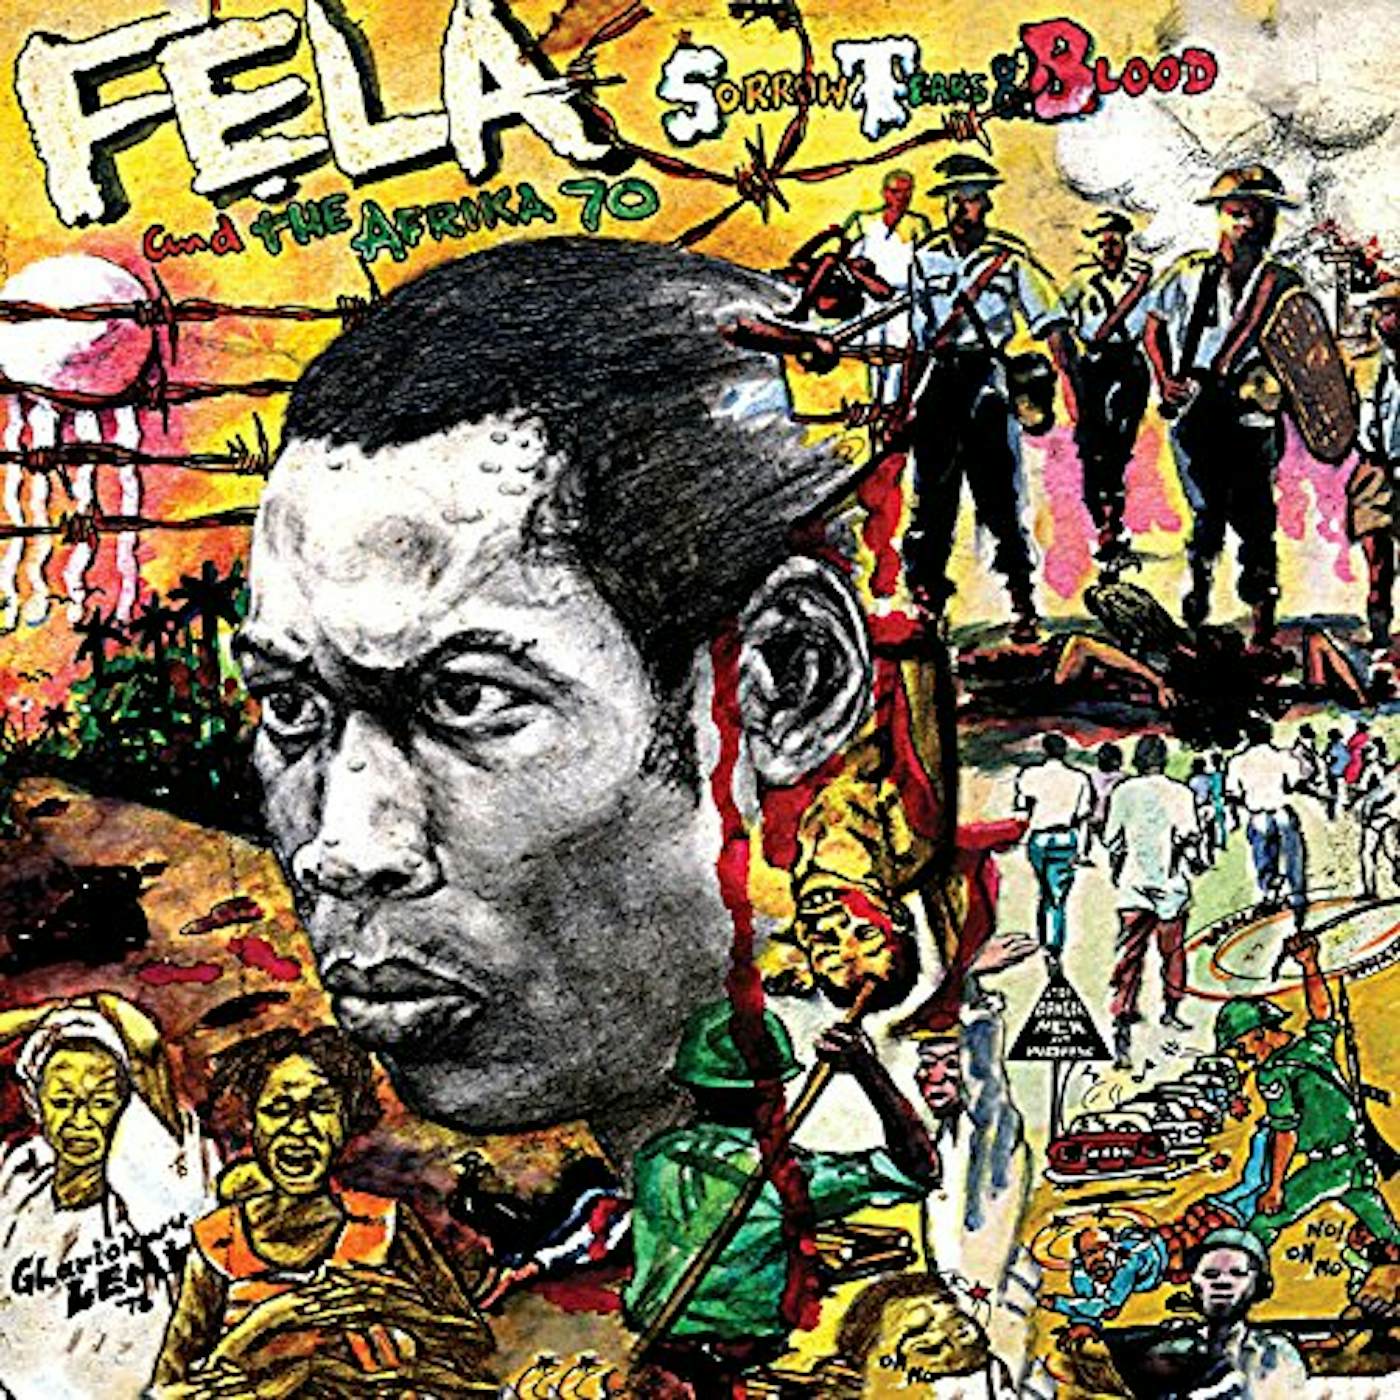 Fela Kuti Sorrow Tears & Blood Vinyl Record